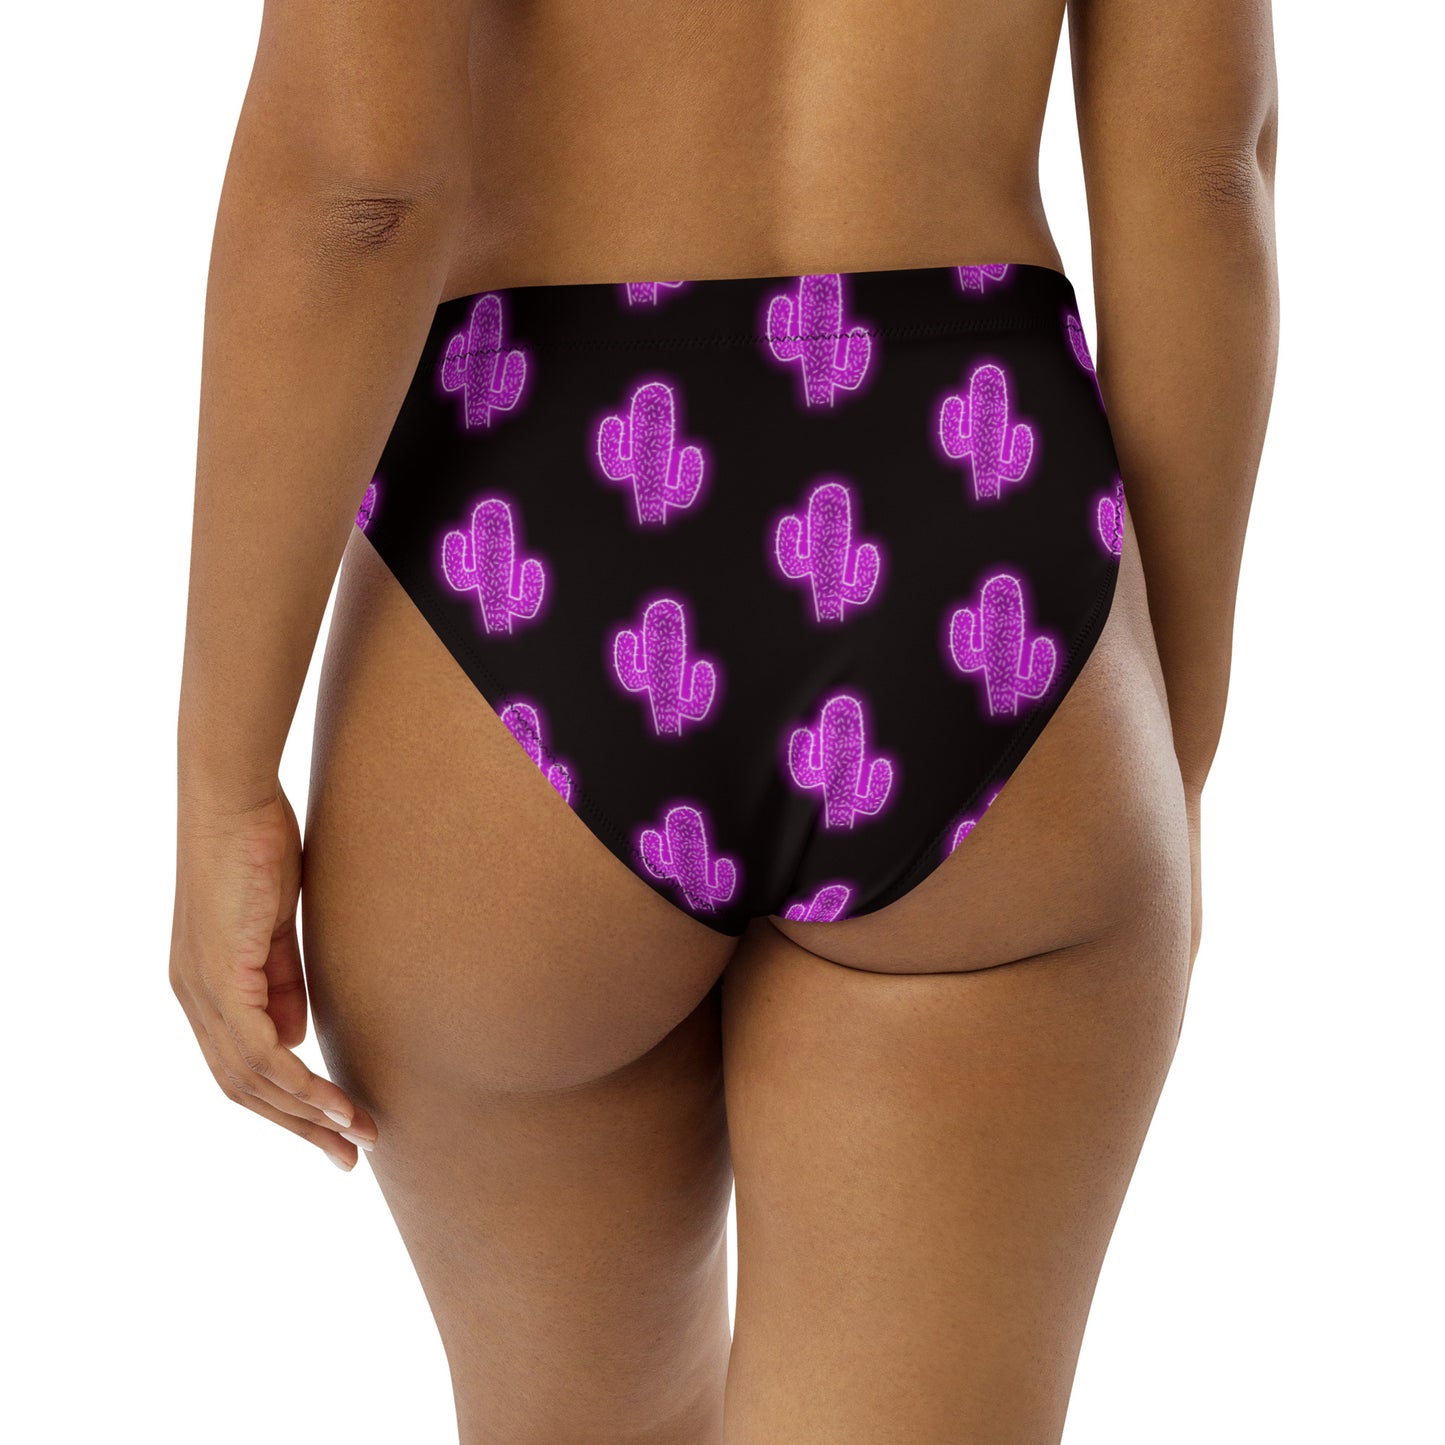 Yeehaw Purple Neon Cactus Bikini Bottom - #bkbottom, cactus, cactus print, neon, purple, swim, swim suit, swim wear, swimming -  - Baha Ranch Western Wear